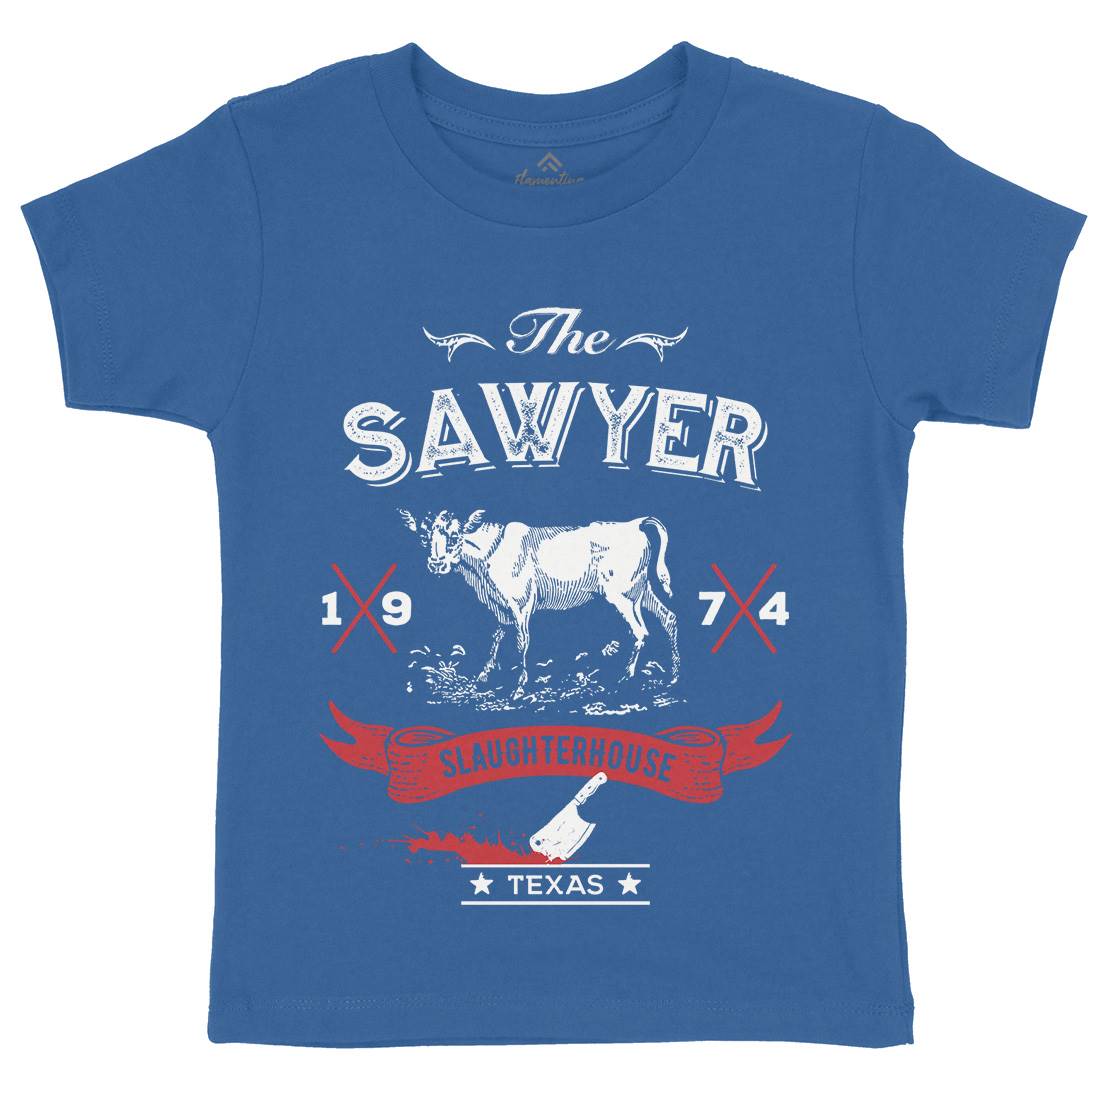 Sawyer Slaughterhouse Kids Organic Crew Neck T-Shirt Horror D208